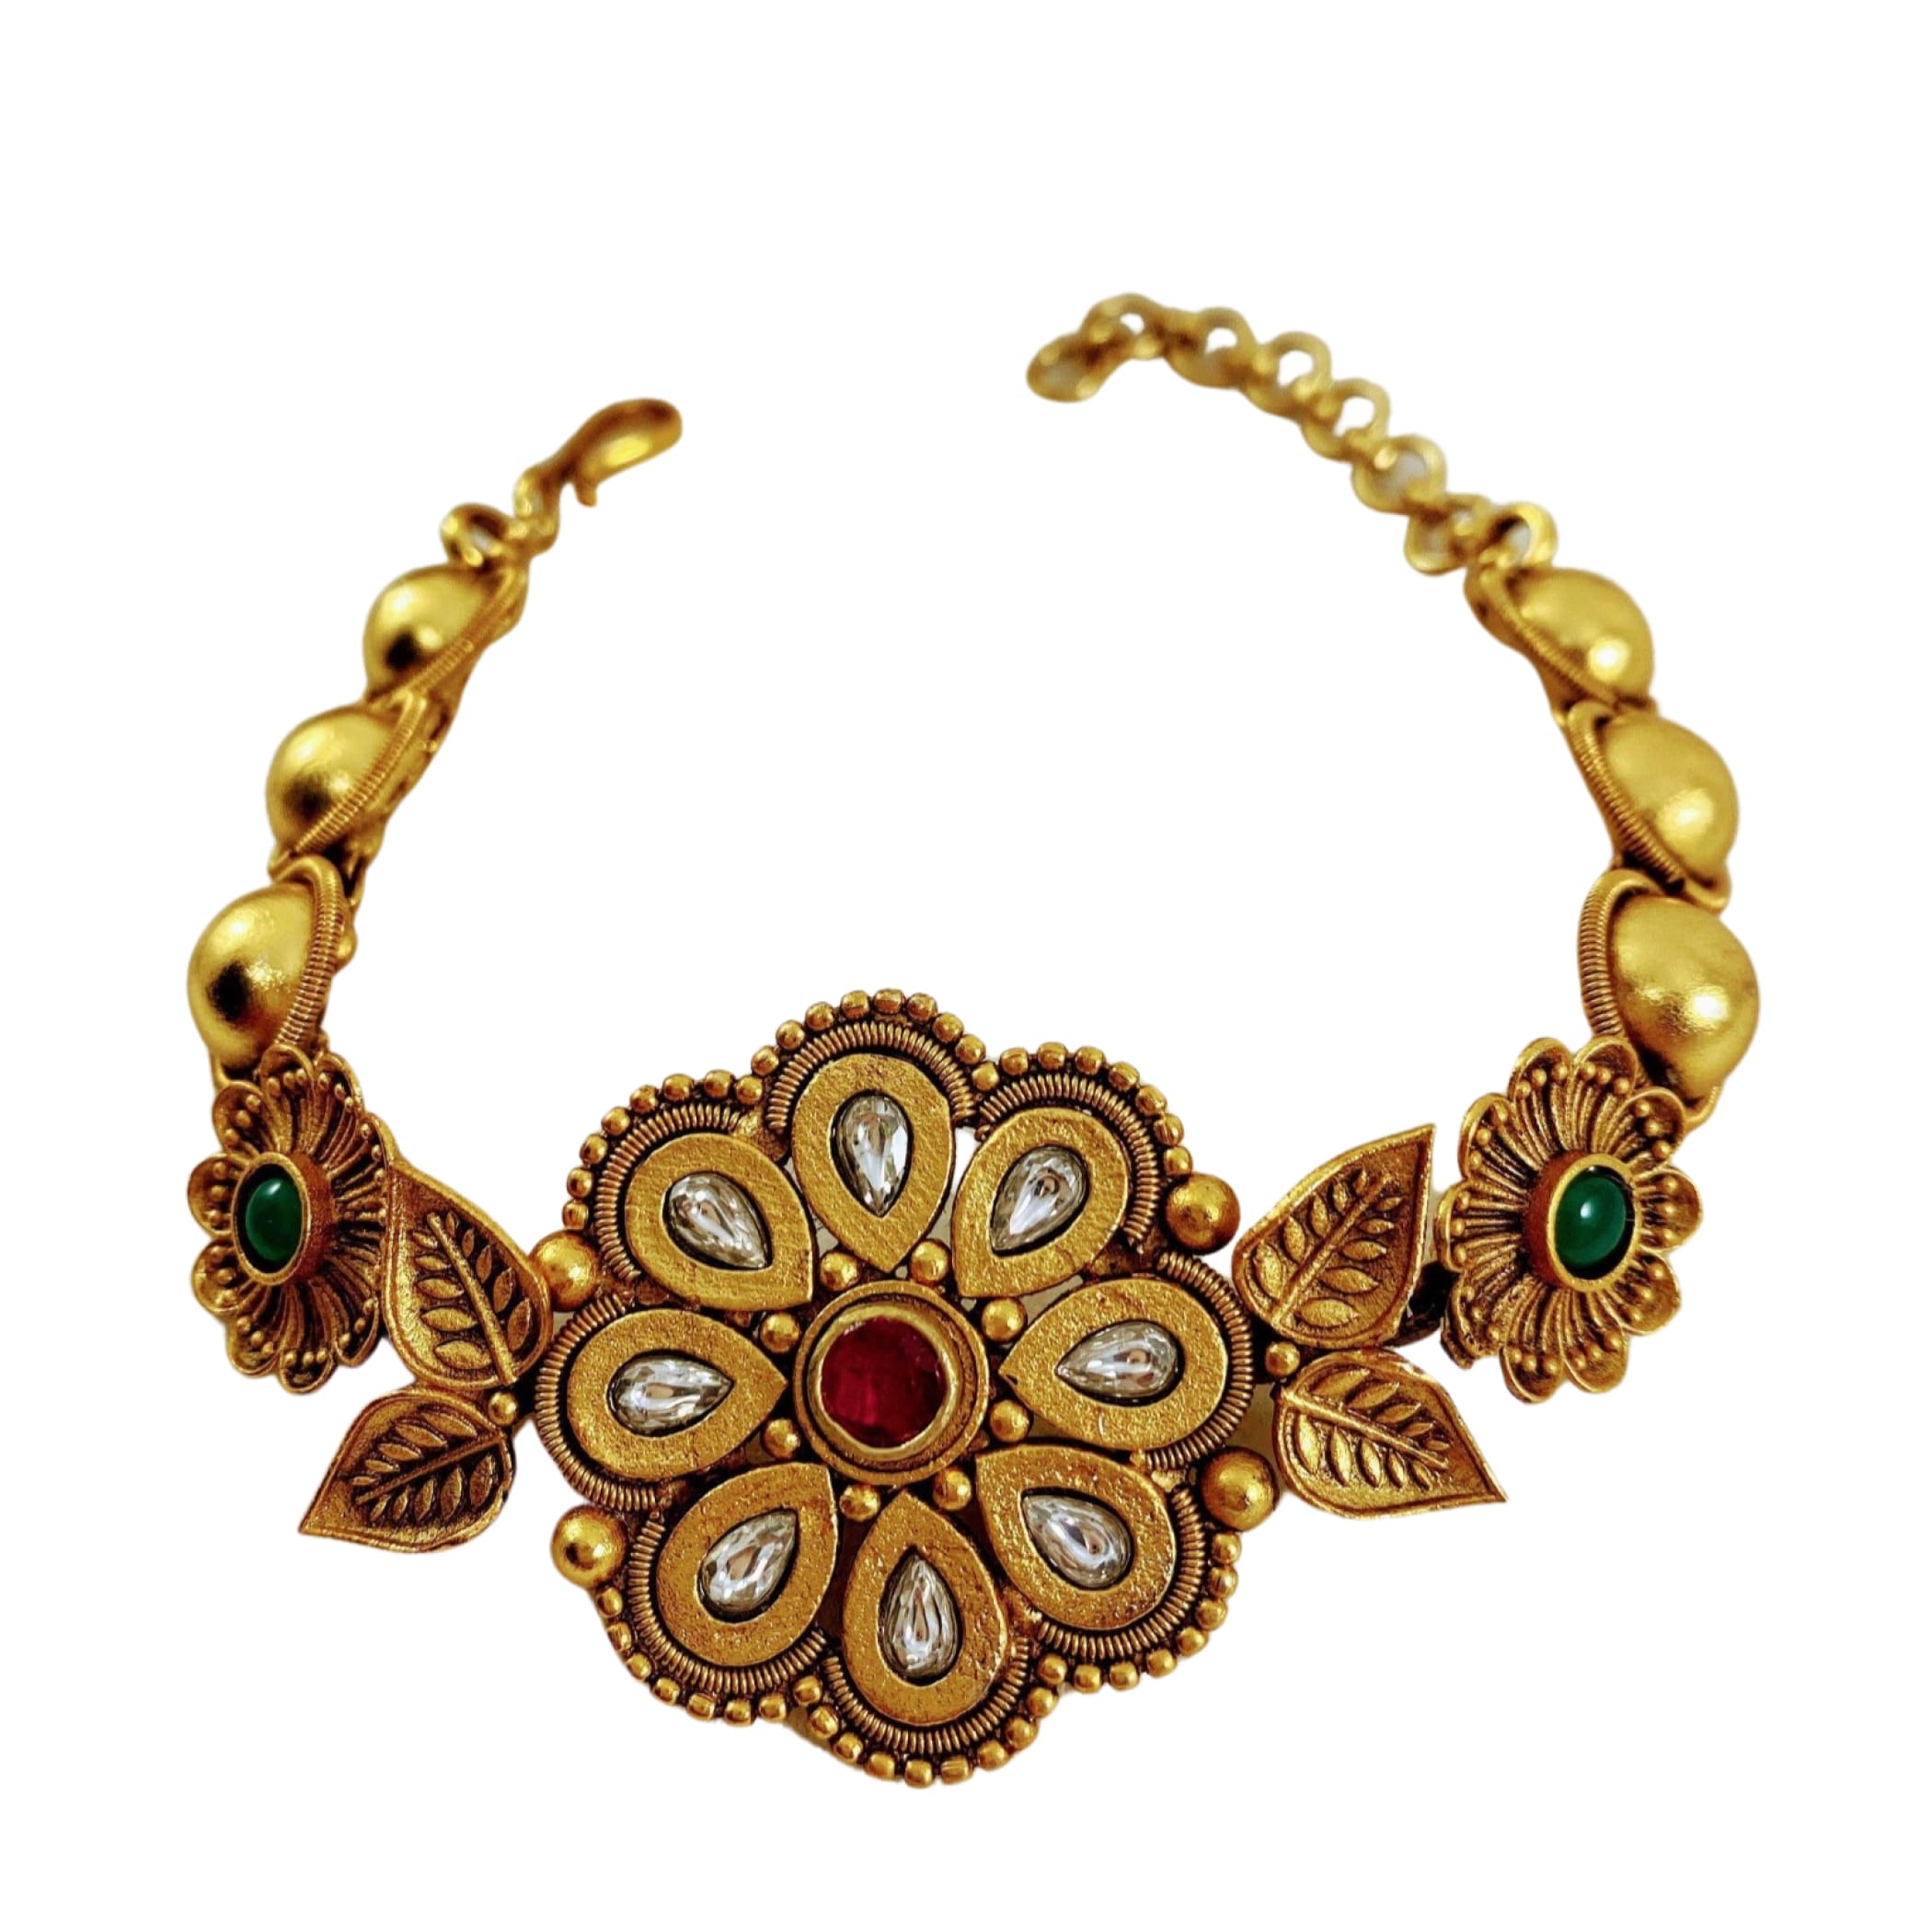 Antique south indian bracelet with matte gold plating bangle